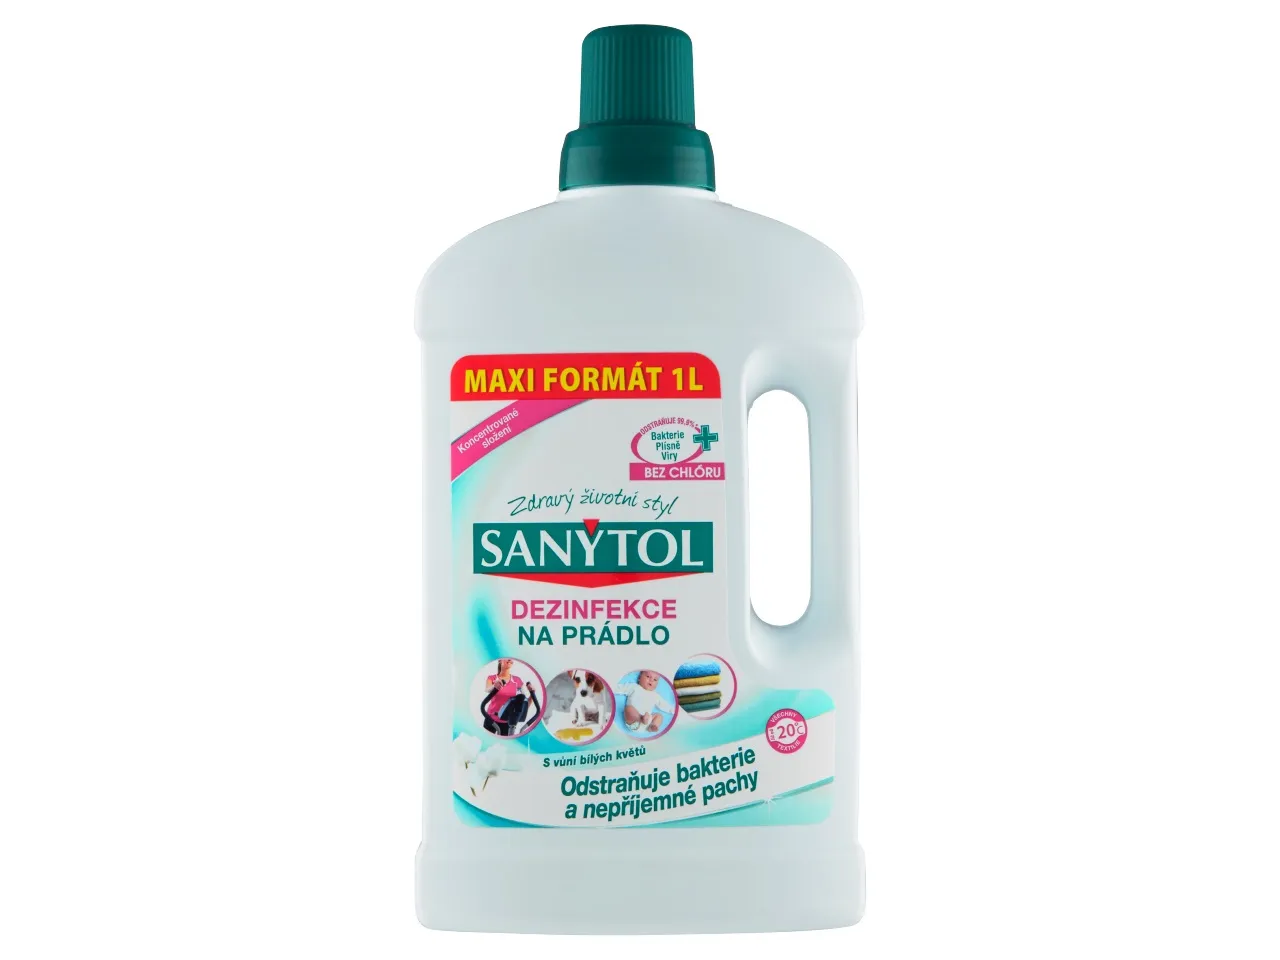 Sanytol dezinfekcia na prádlo 1×1000 ml, dezinfekcia na prádlo